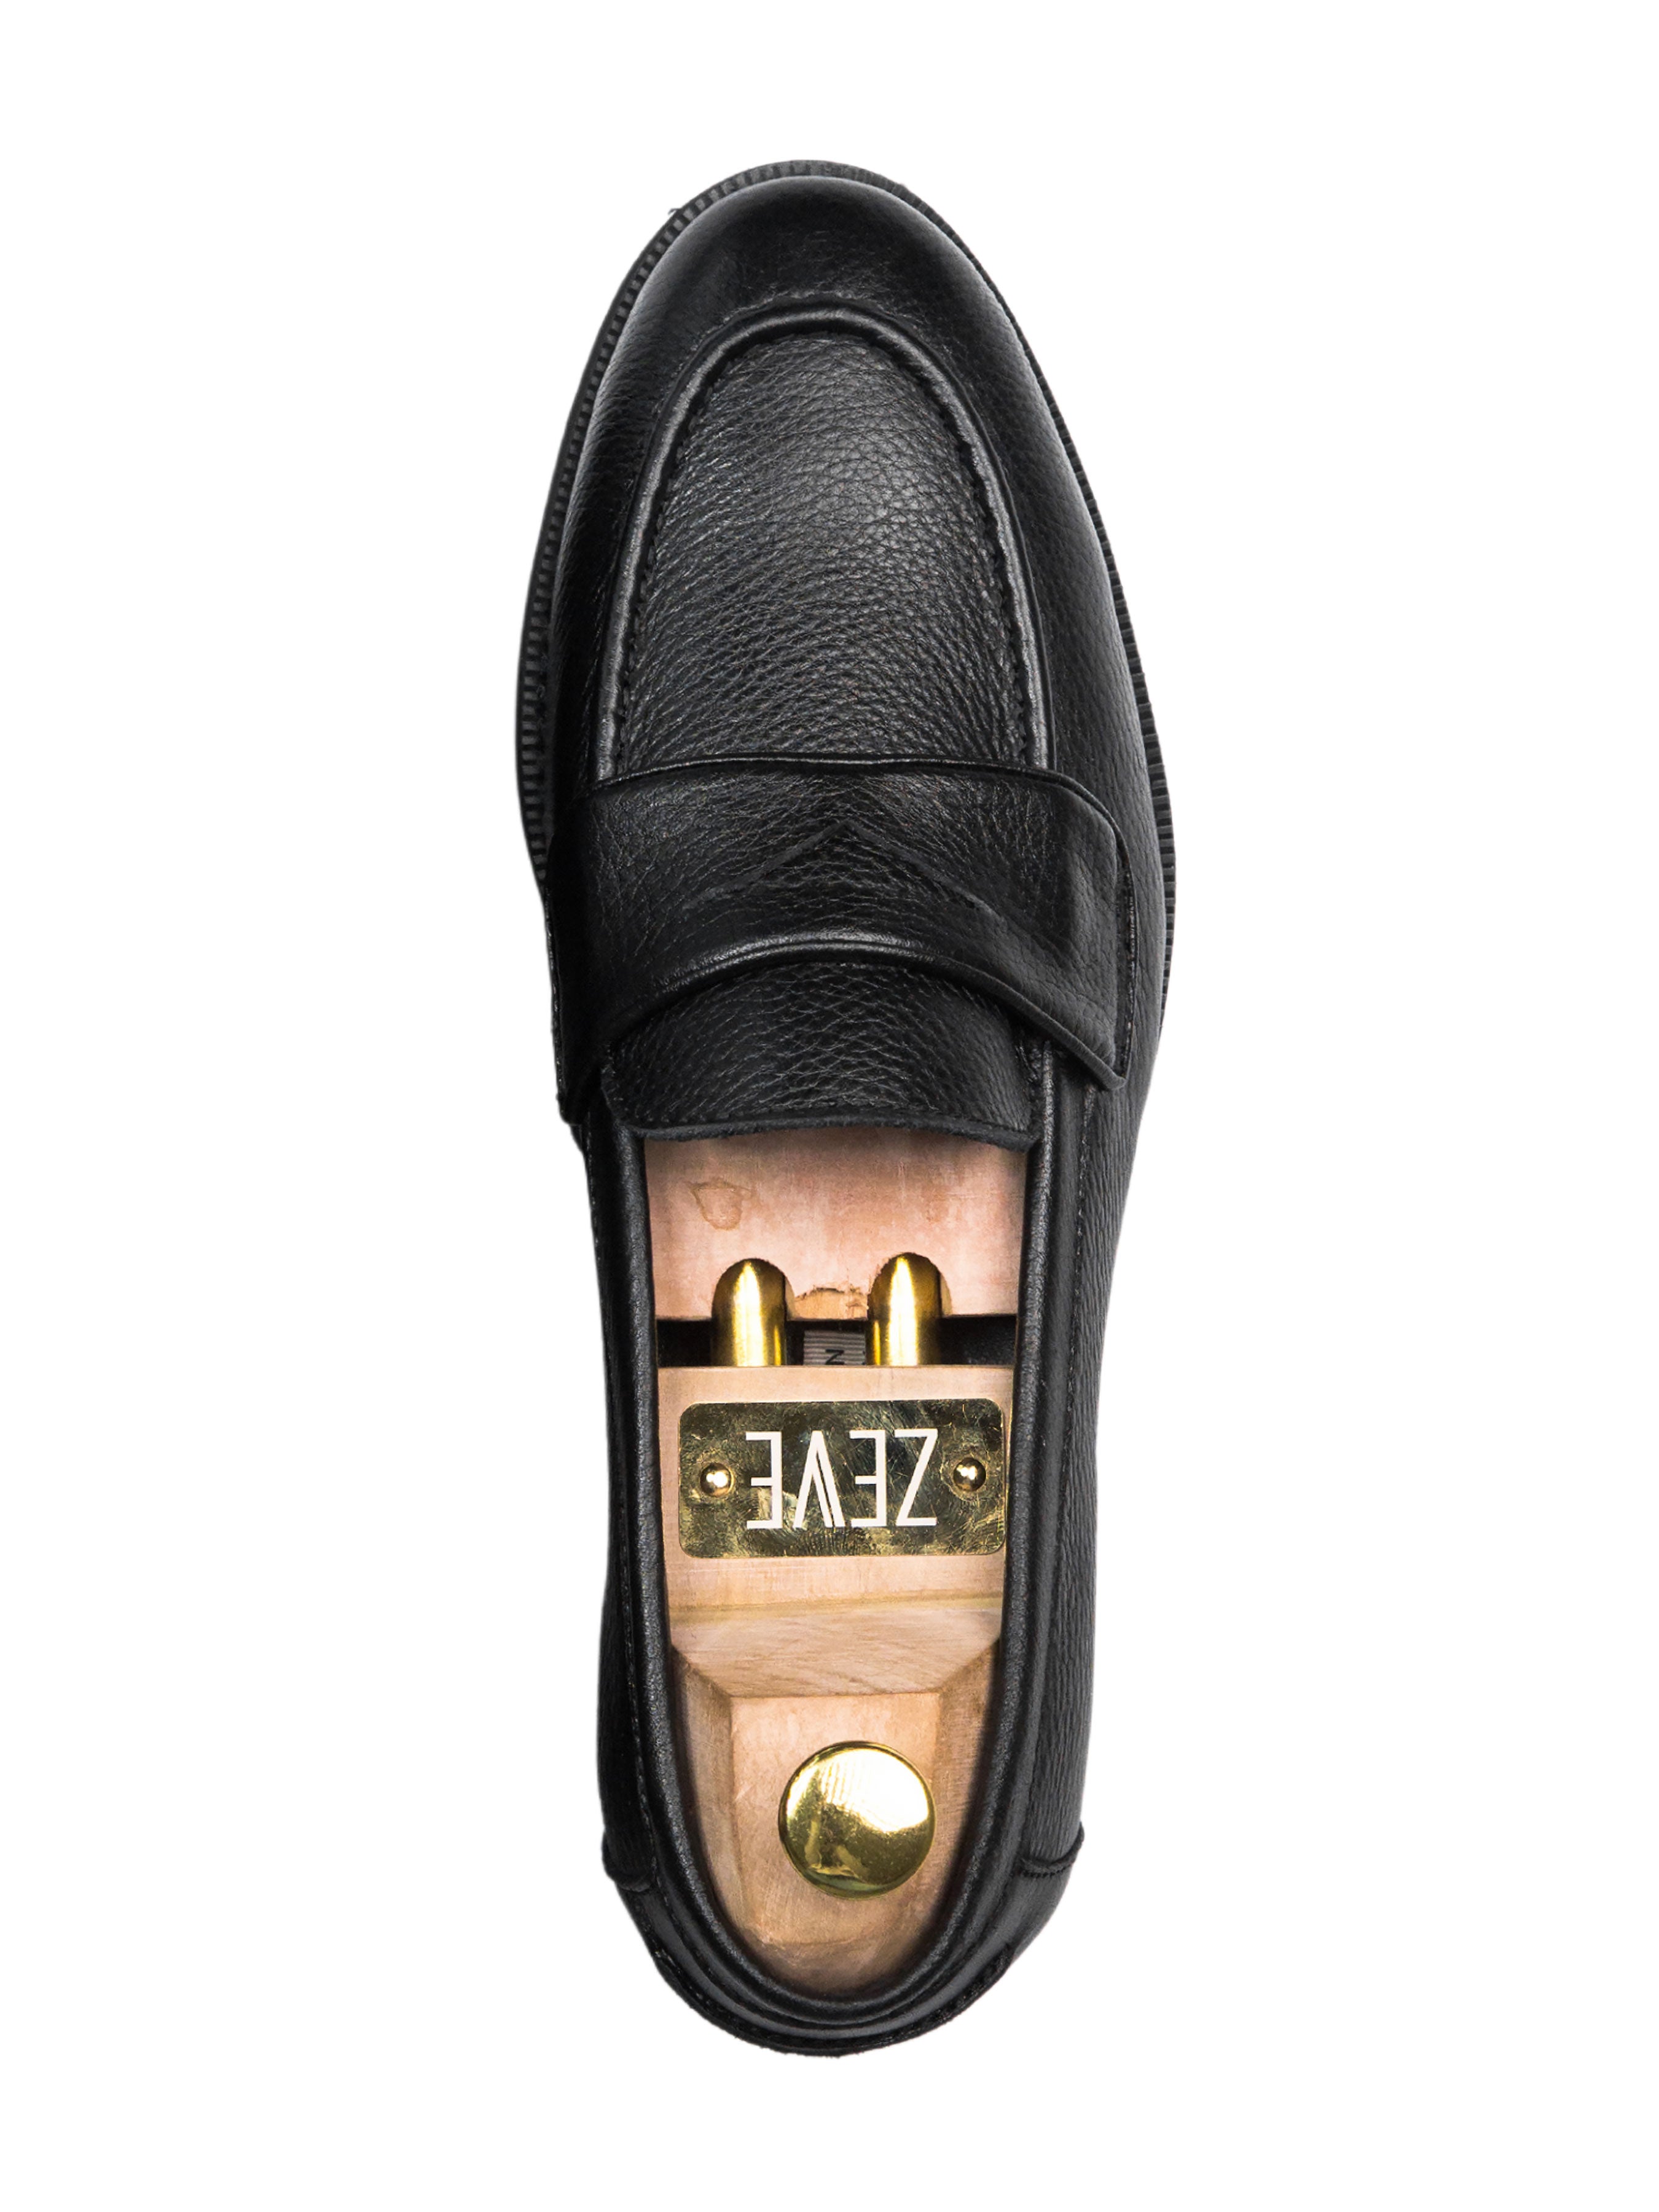 Wayne Penny Loafer - Black Pebble Grain Leather (Crepe Sole) - Zeve Shoes